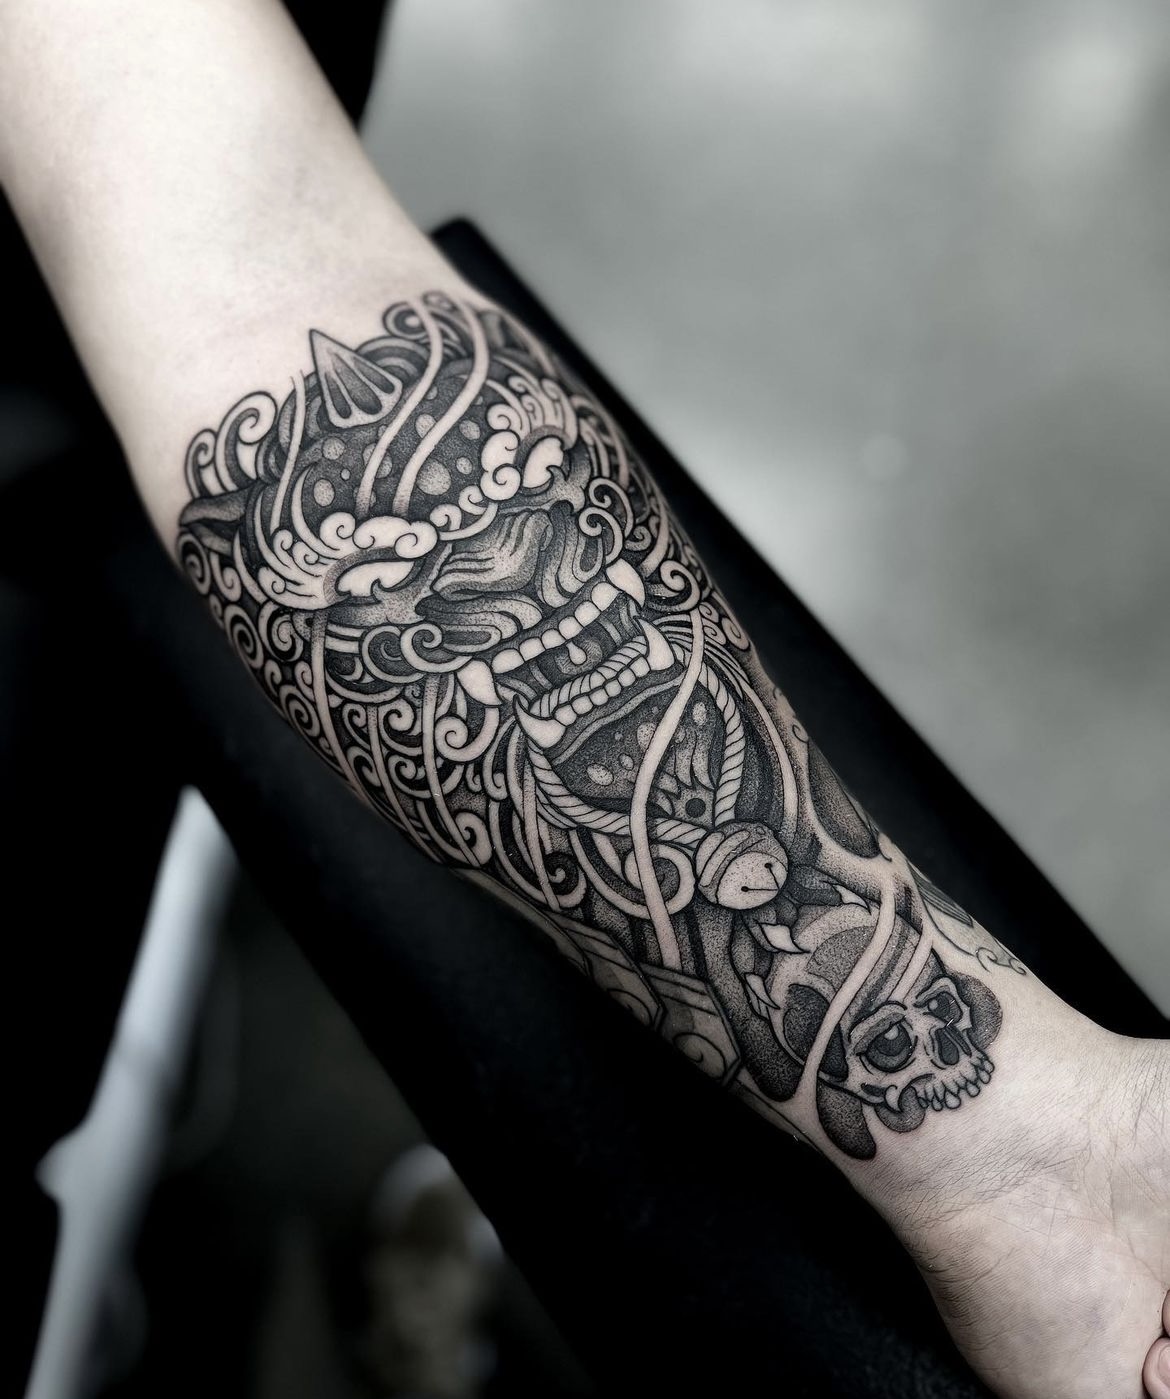 Linework, Black and Gray, Illustrative, Blackwork tattoo by Chris X Edge